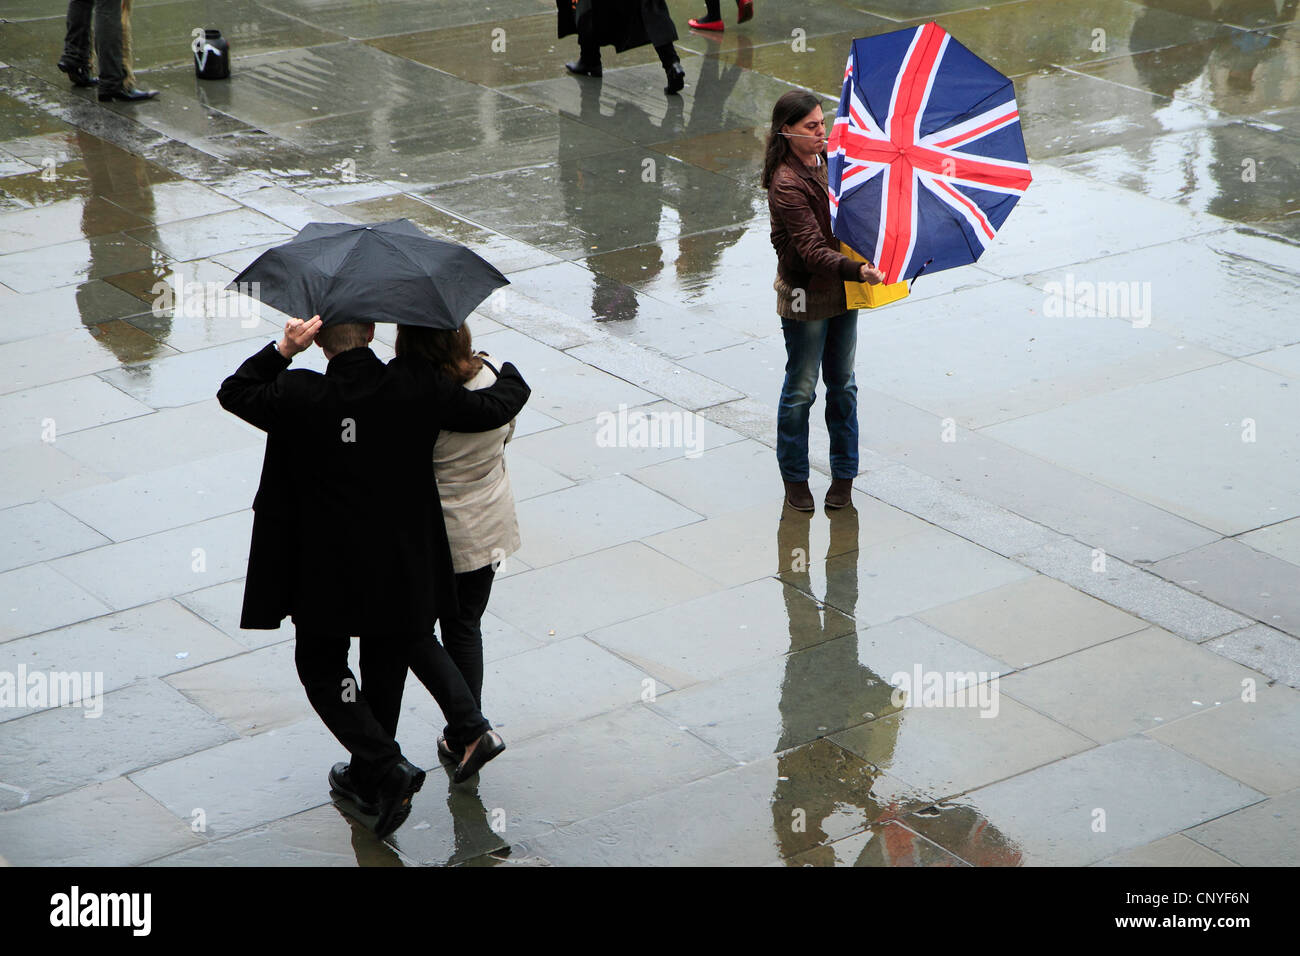 Frau kämpft mit kaputten Regenschirm in Regen, London. Stockfoto